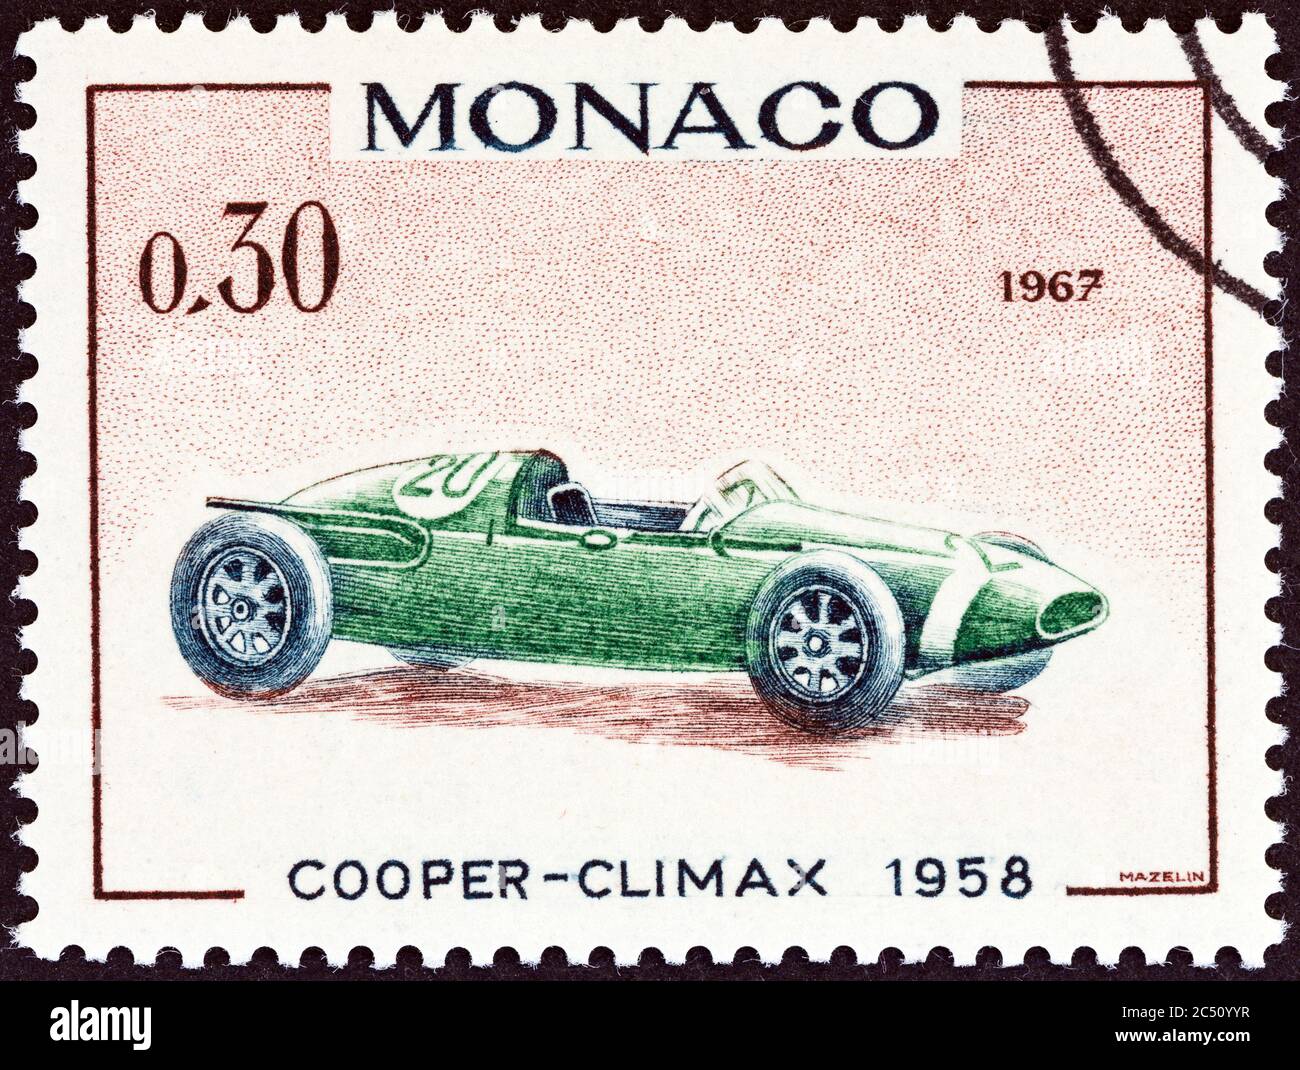 MONACO - CIRCA 1967: A stamp printed in Monaco shows Cooper-Climax Grand Prix racing car of 1958, winner of Monaco Grand Prix, circa 1967. Stock Photo